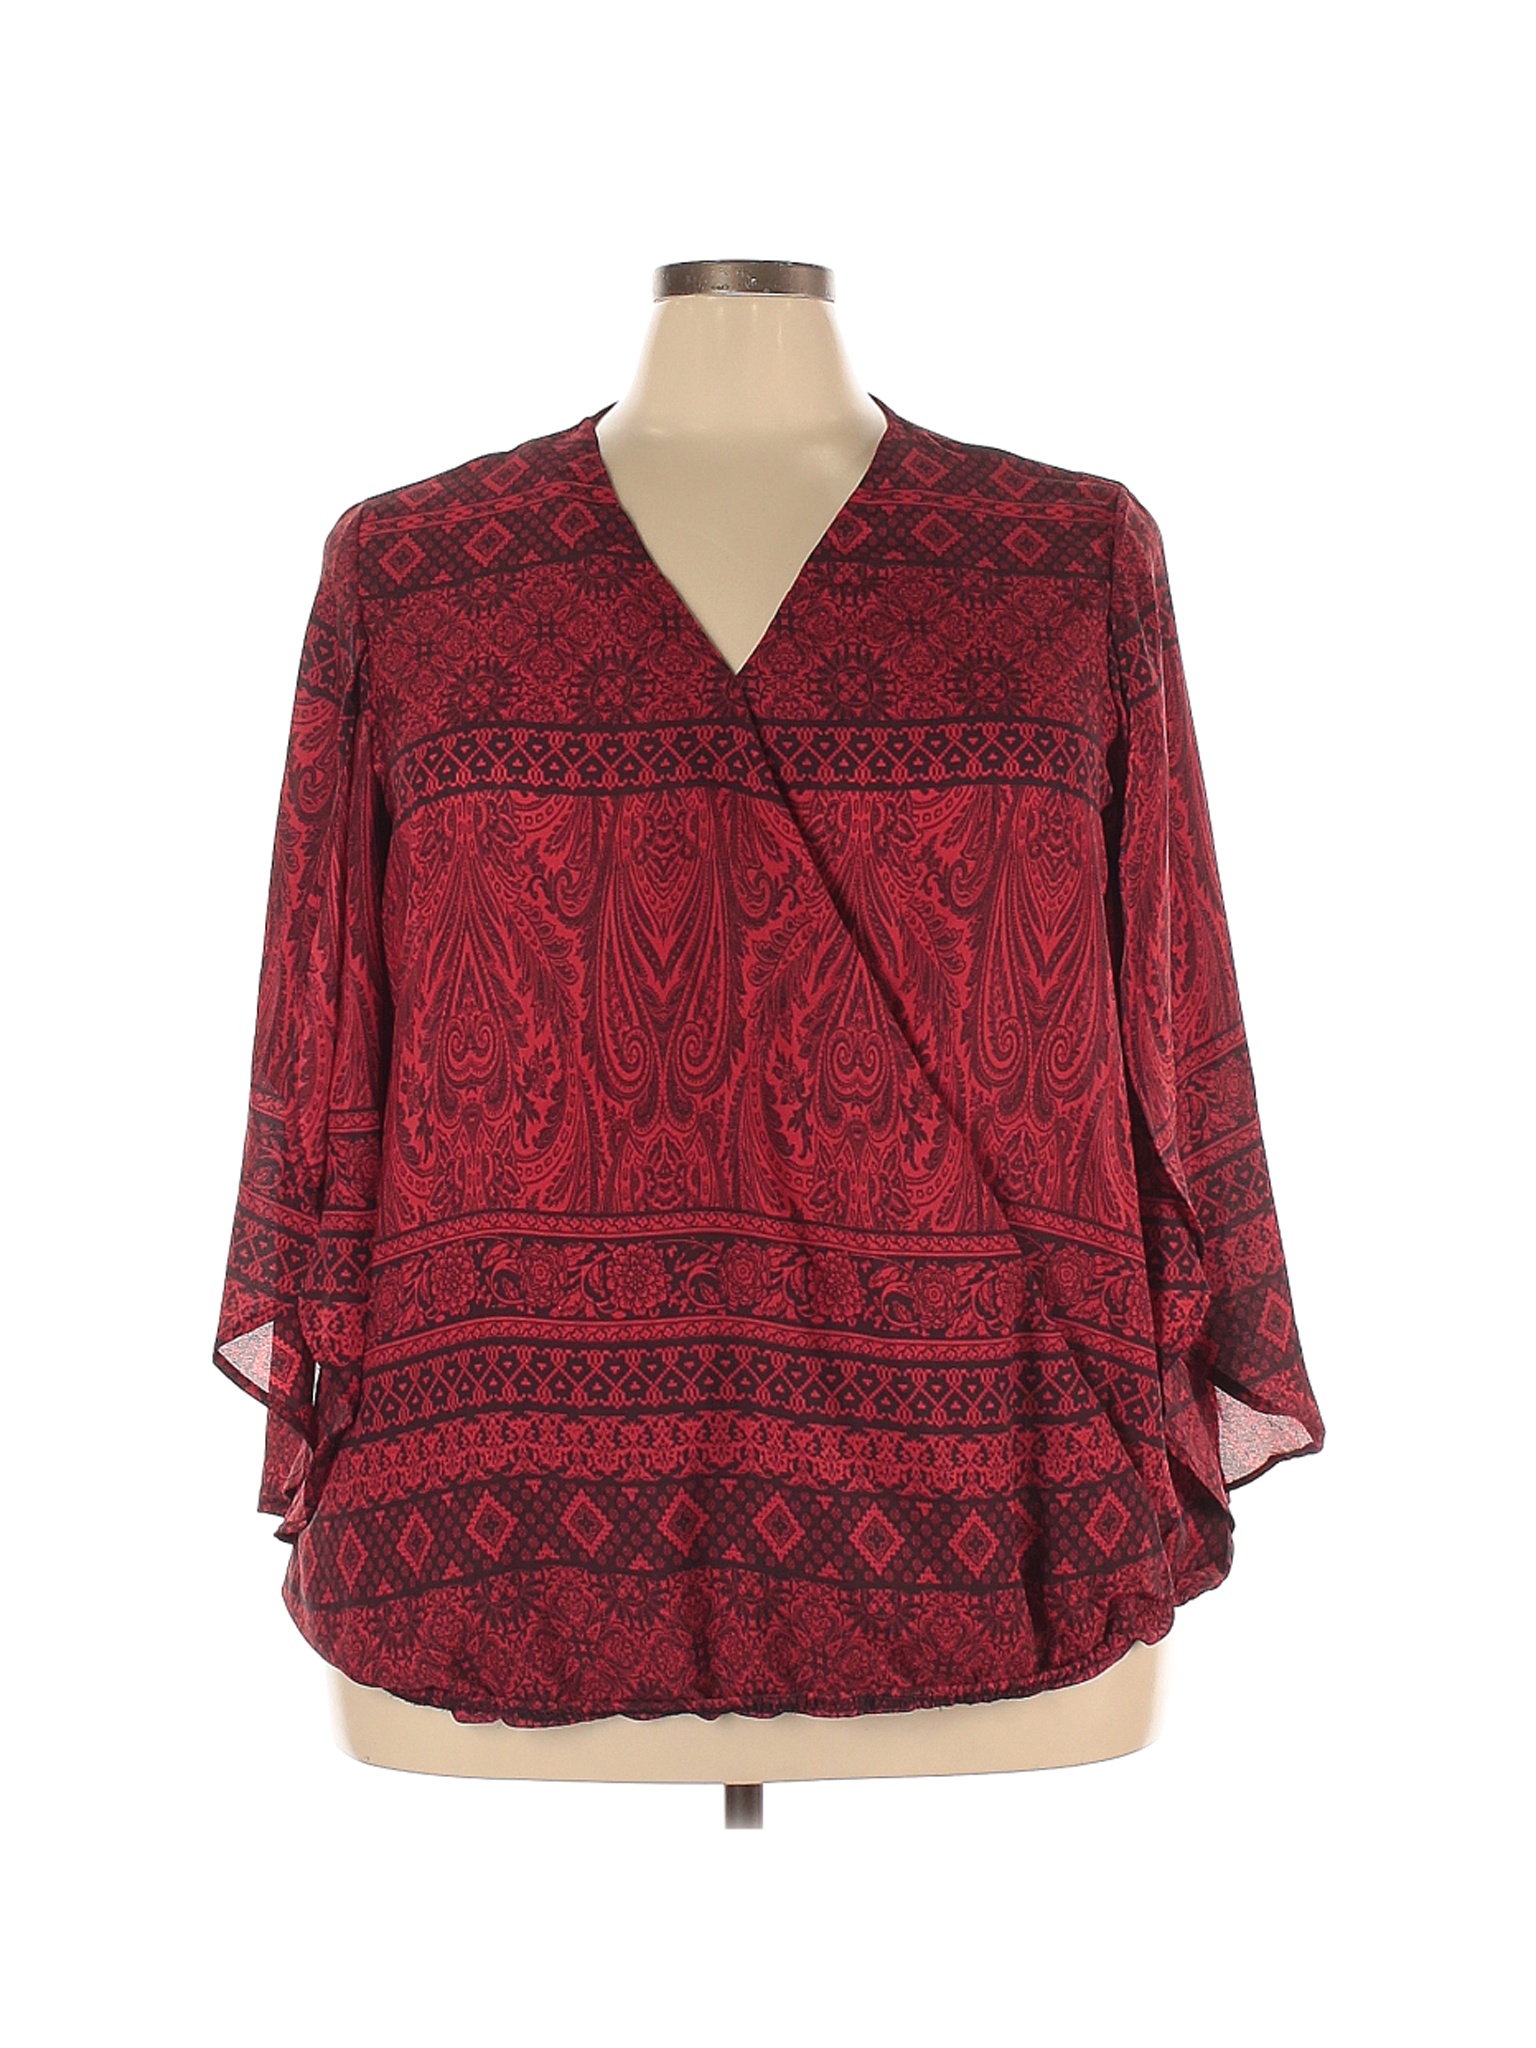 Roz & Ali Women Red Long Sleeve Blouse 3X Plus | eBay